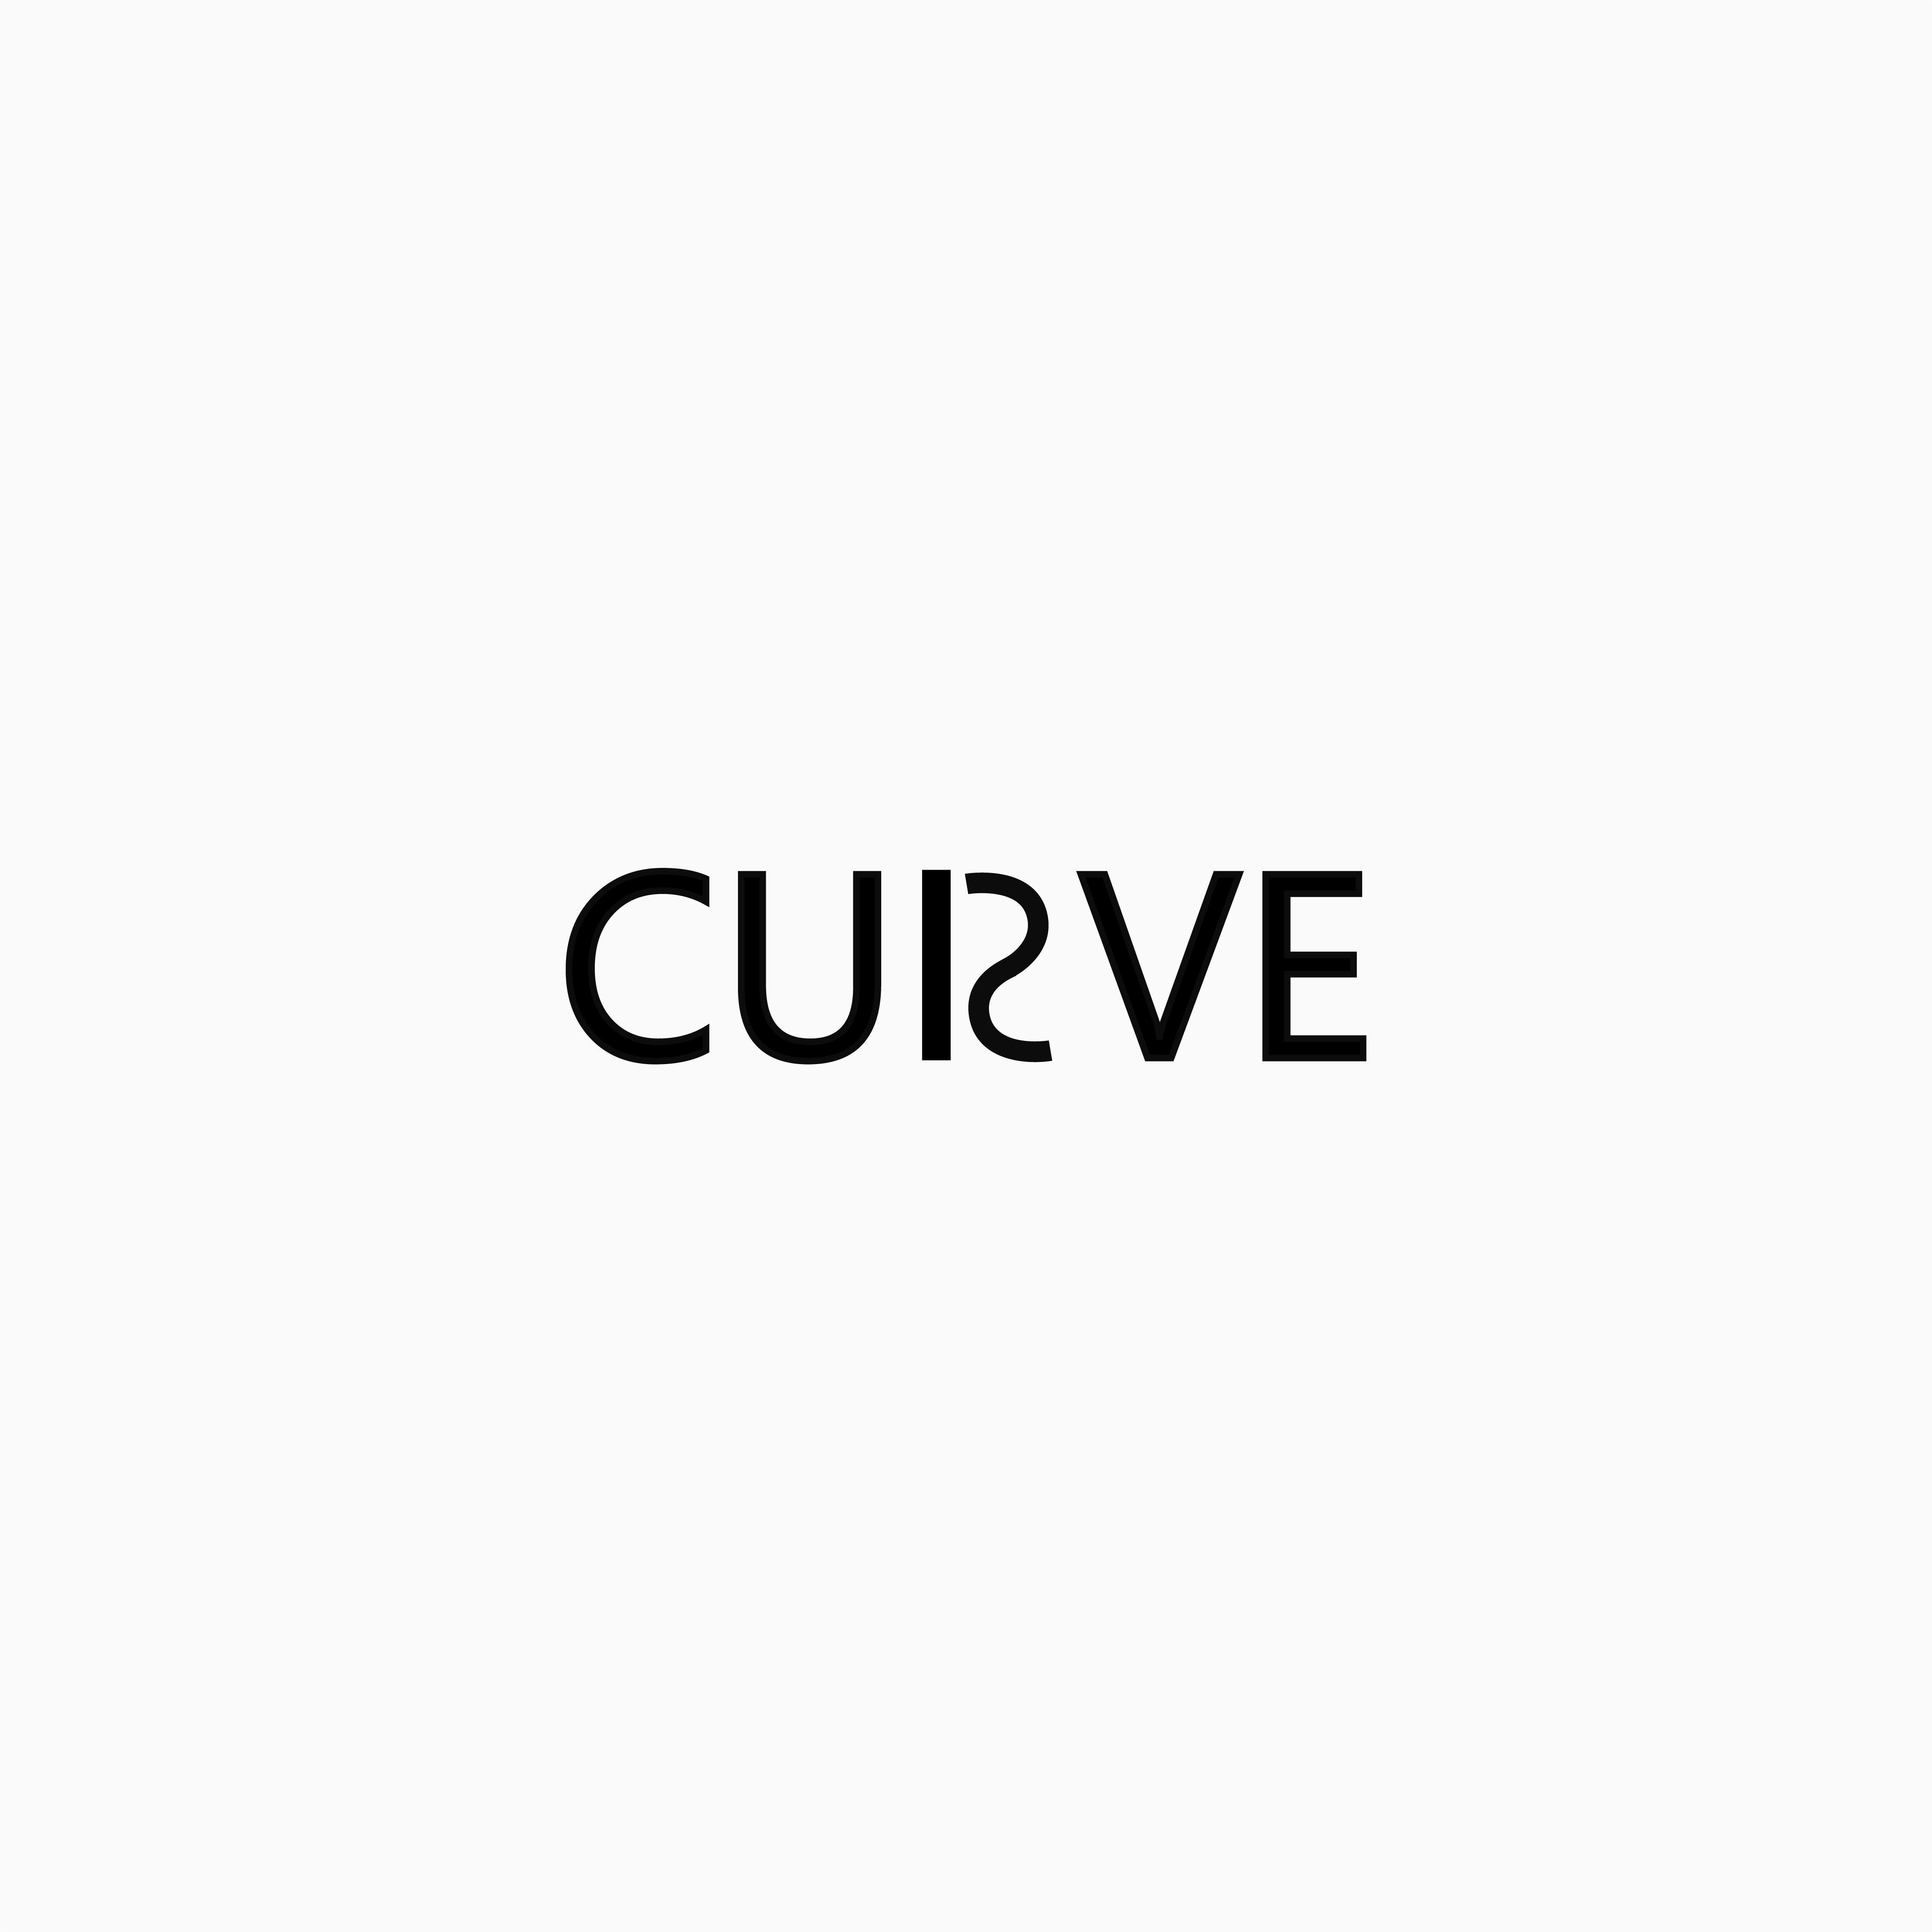 Curve Logo - CURVE 10/100. | 100 creative & minimalistic logo designs | Logos ...